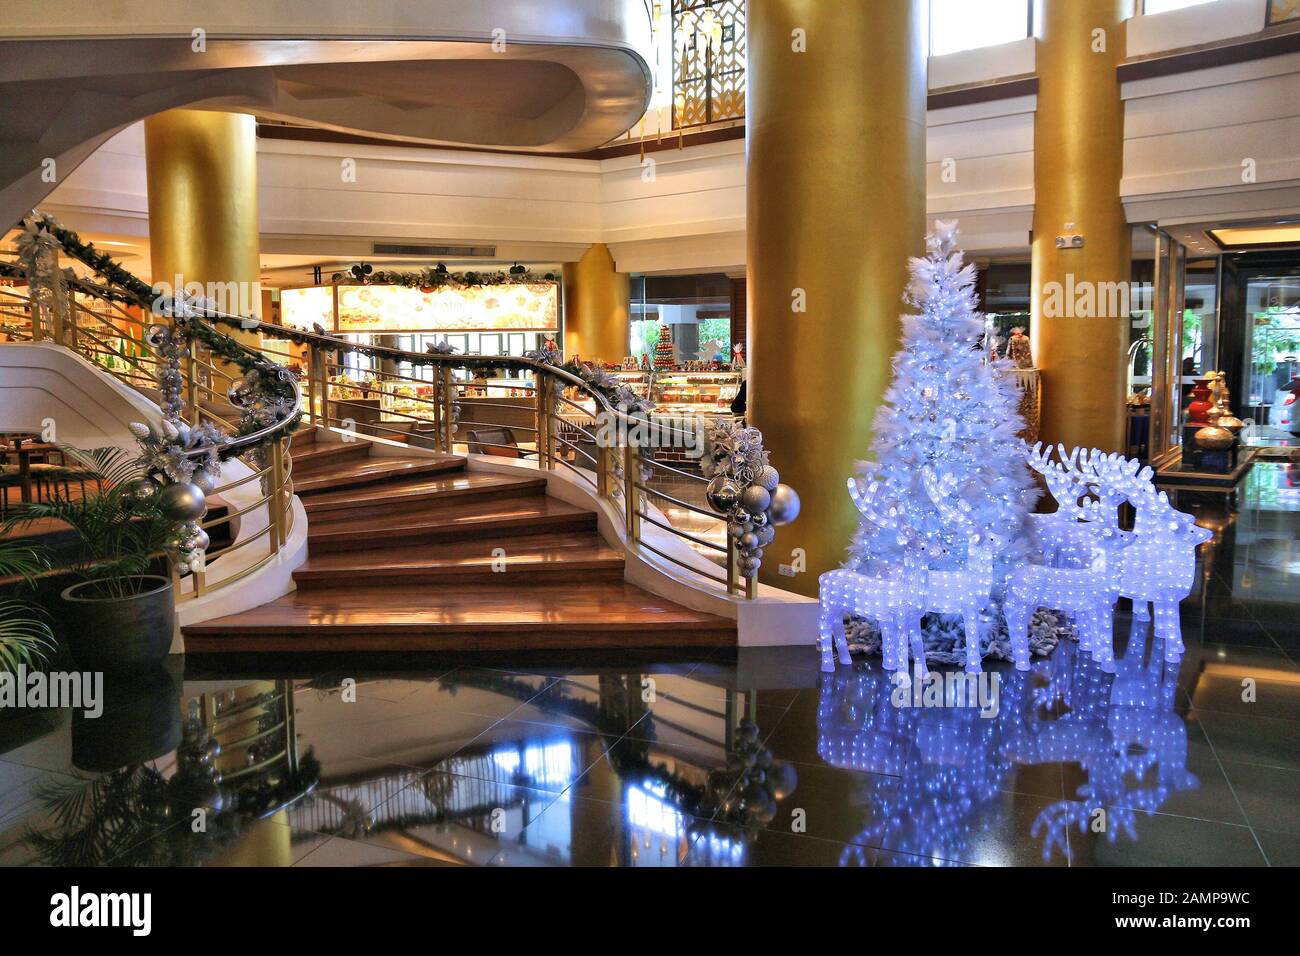 Make It Makati - Visit the Louis Vuitton Christmas tree at